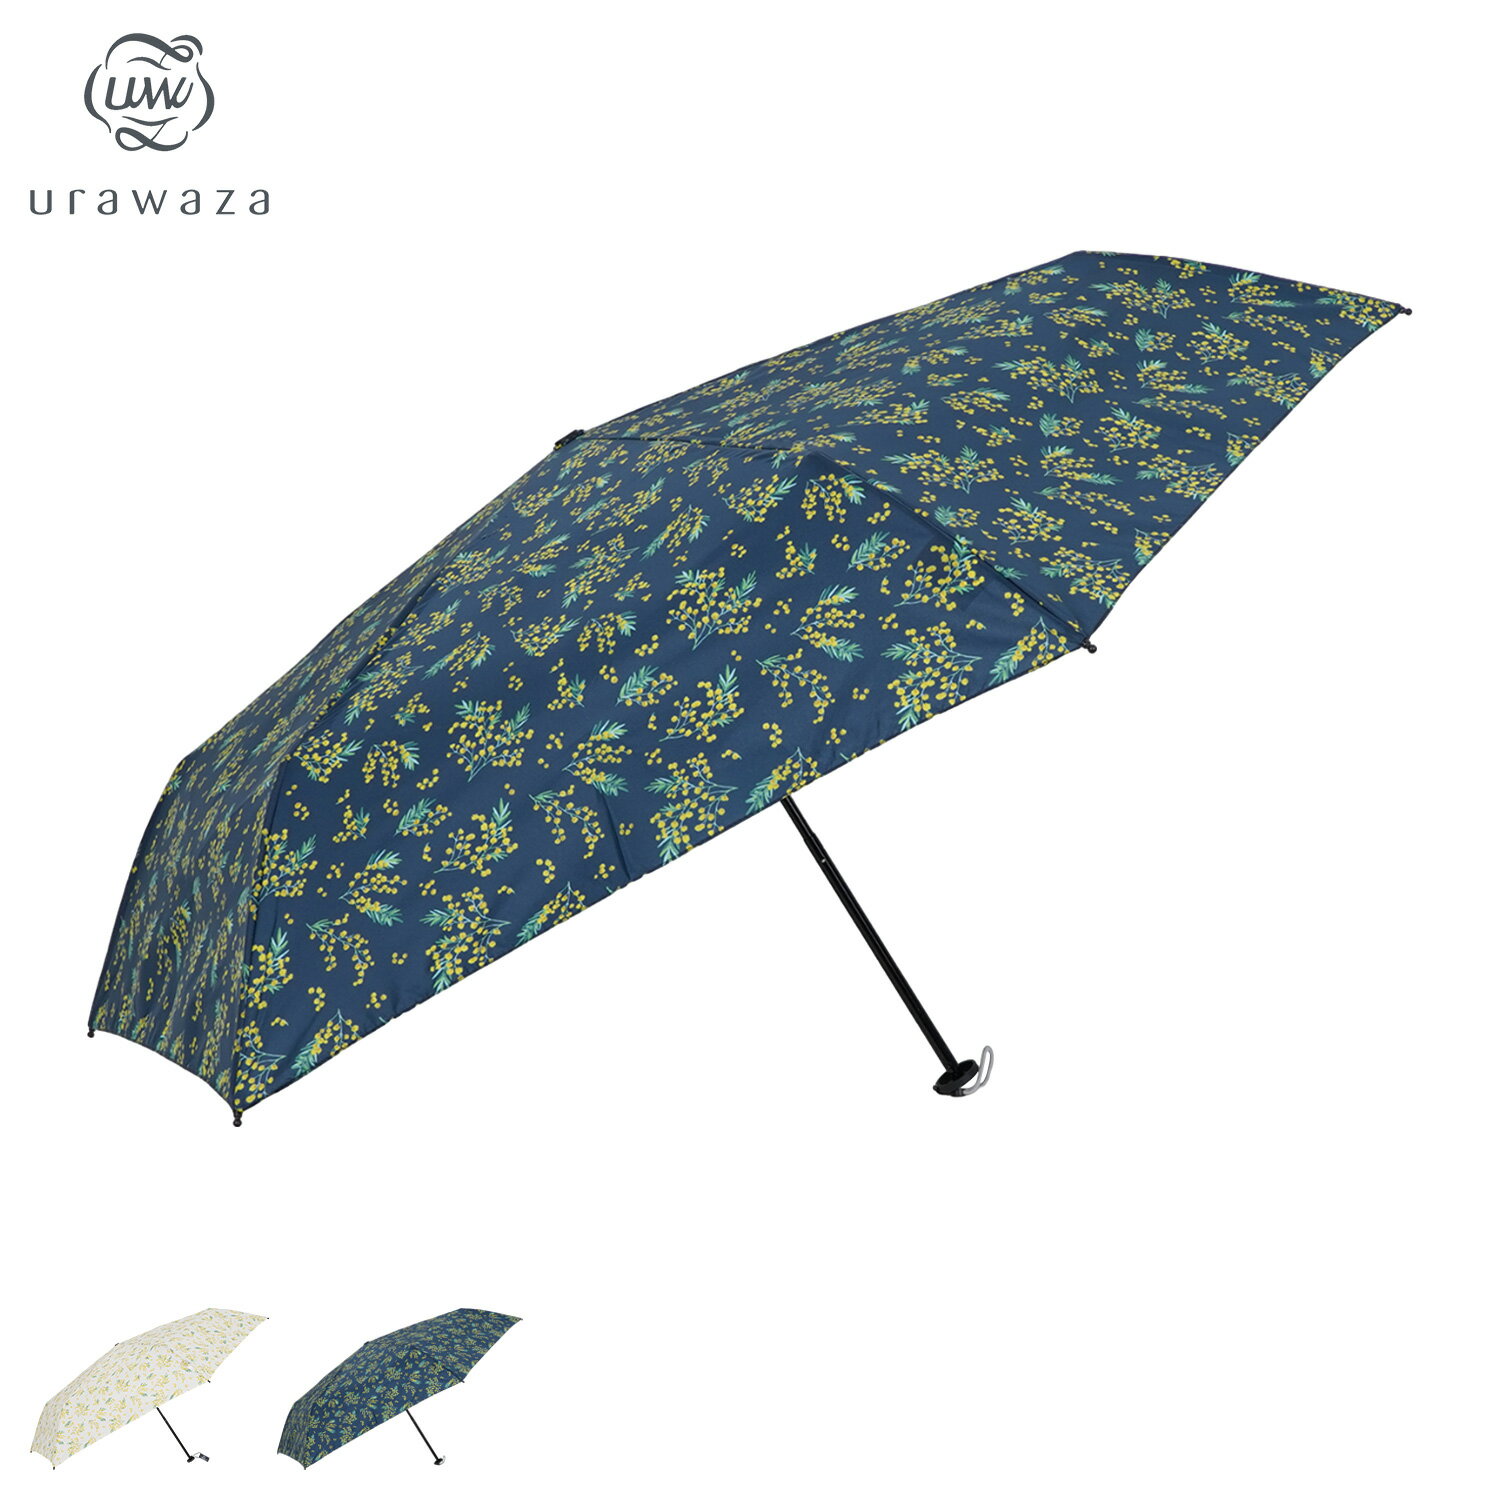 urawaza ミモザガーデン ウラワザ 折り畳み傘 軽量 晴雨兼用 雨傘 日傘 折りたたみ メンズ レディース 55cm UVカット 紫外線対策 オフ ホワイト ブルー 31-230-10312-02